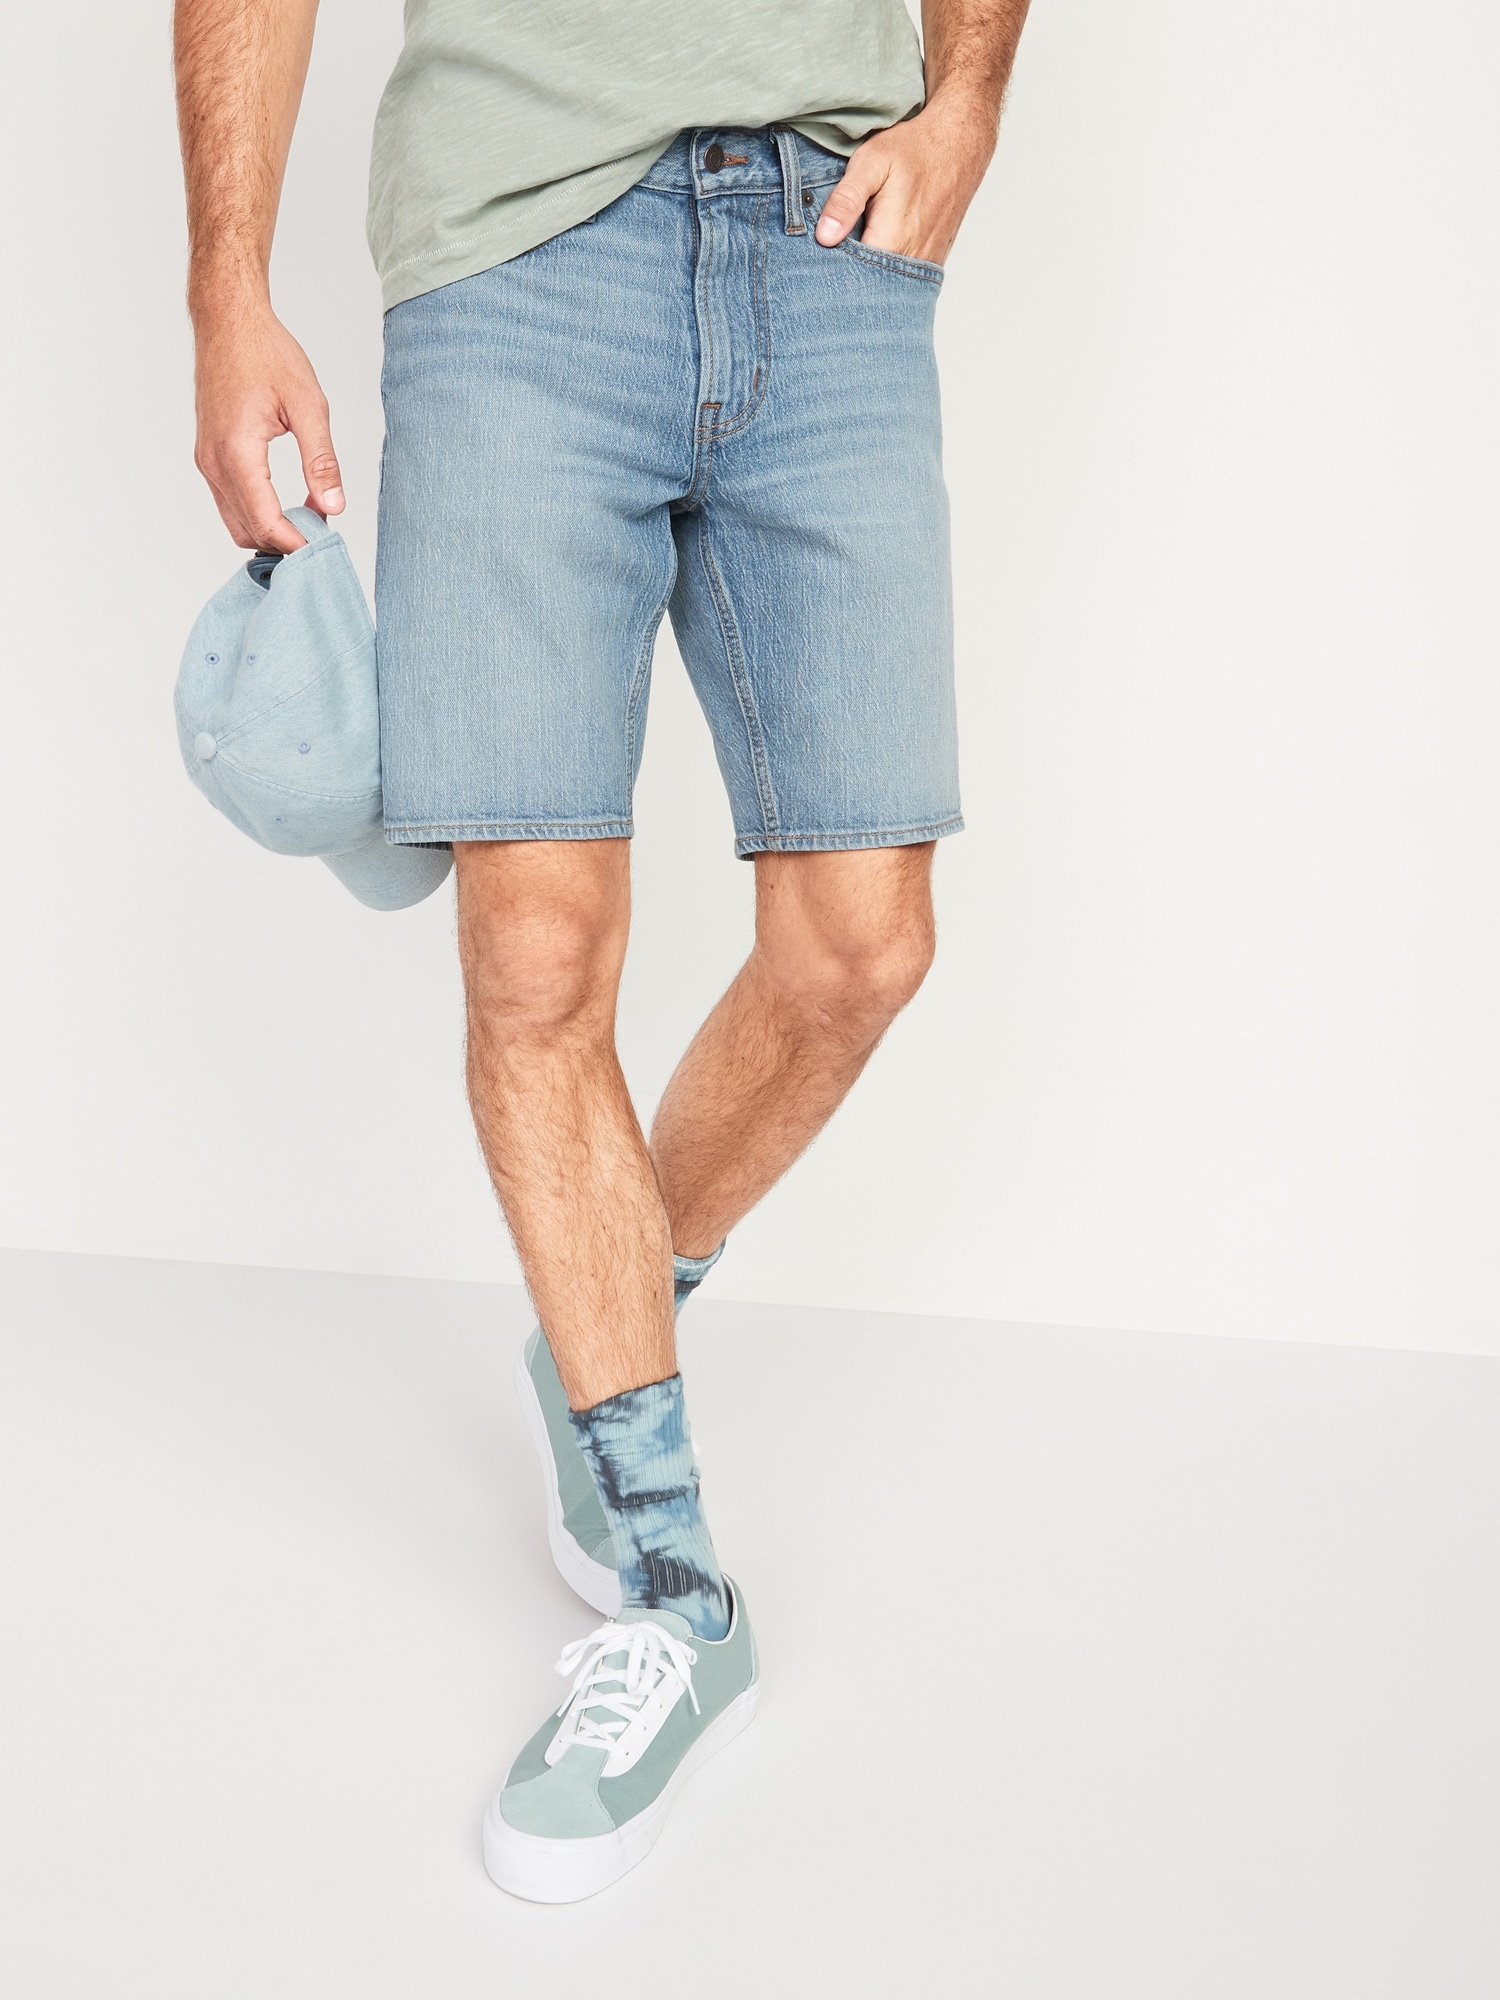 Slim Built-In Flex Jean Shorts for Men -- 9.5-inch inseam